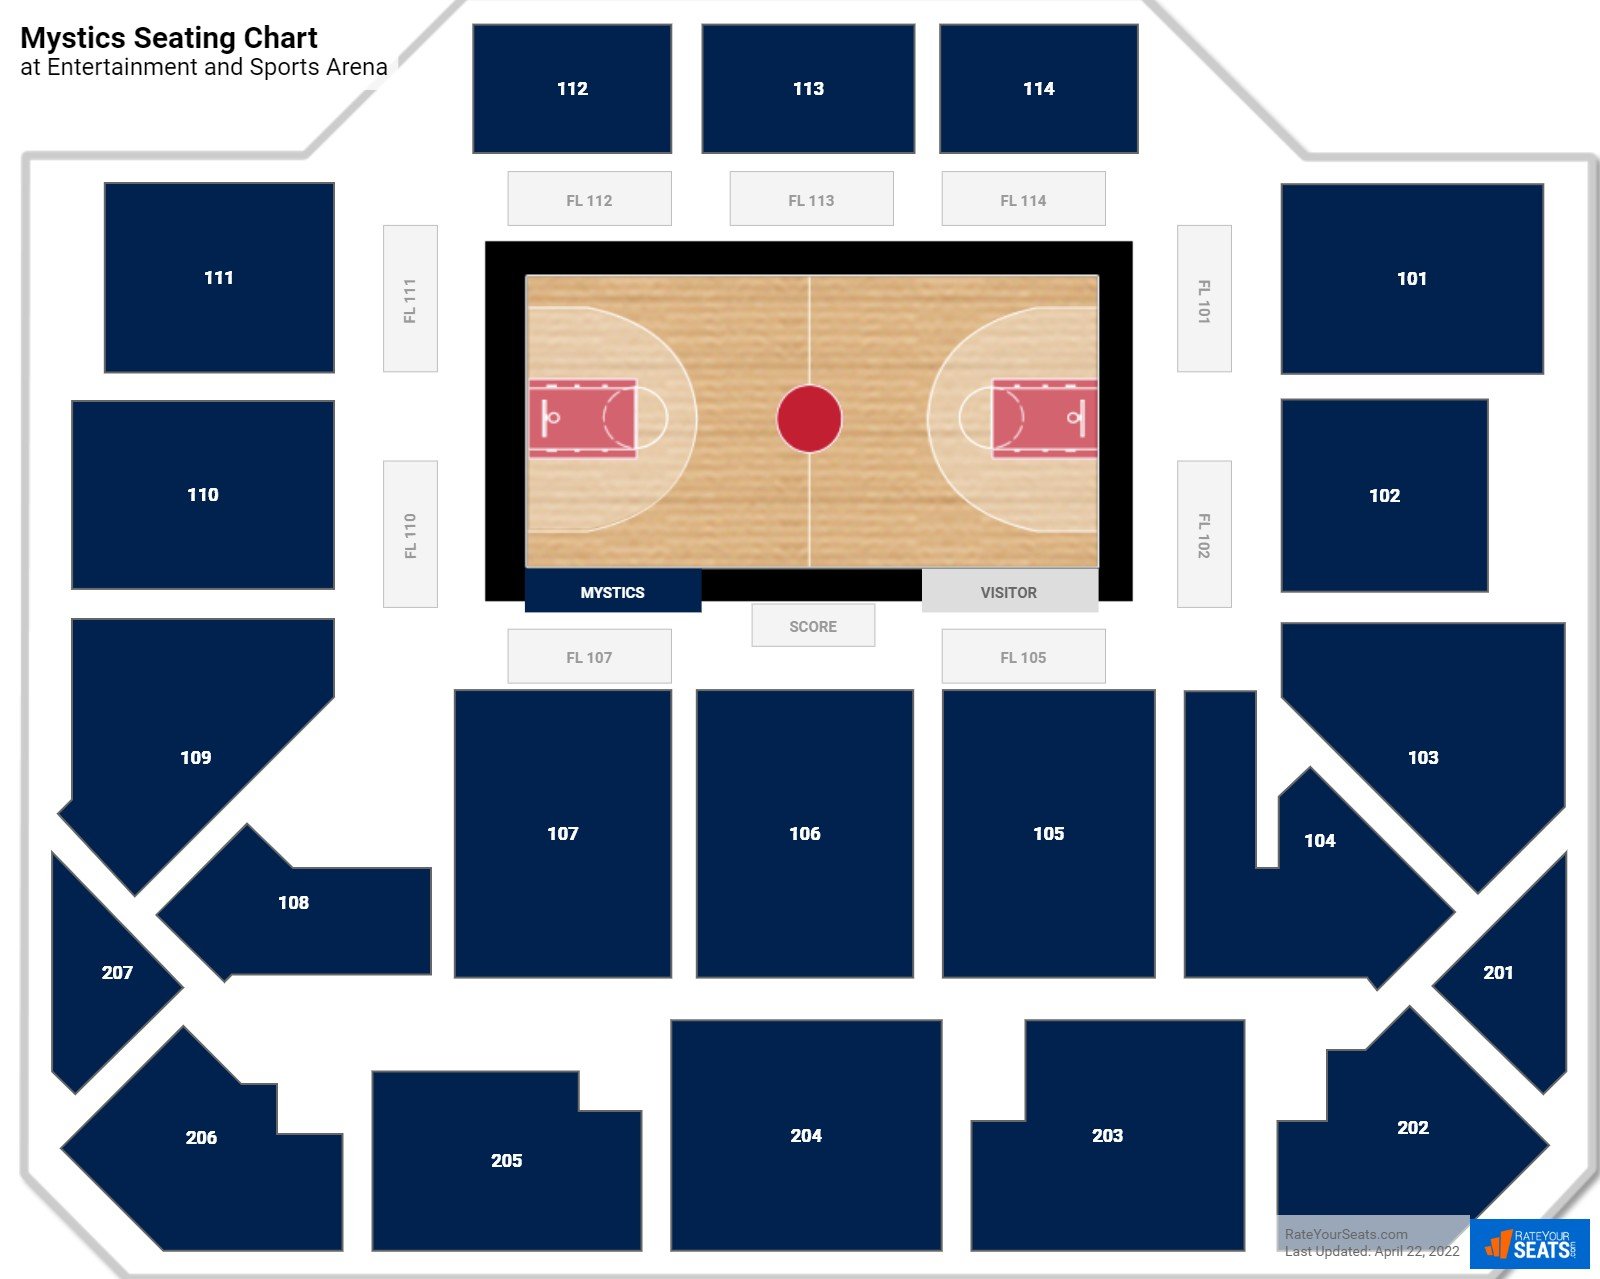 Washington Mystics Seating Chart at Entertainment and Sports Arena